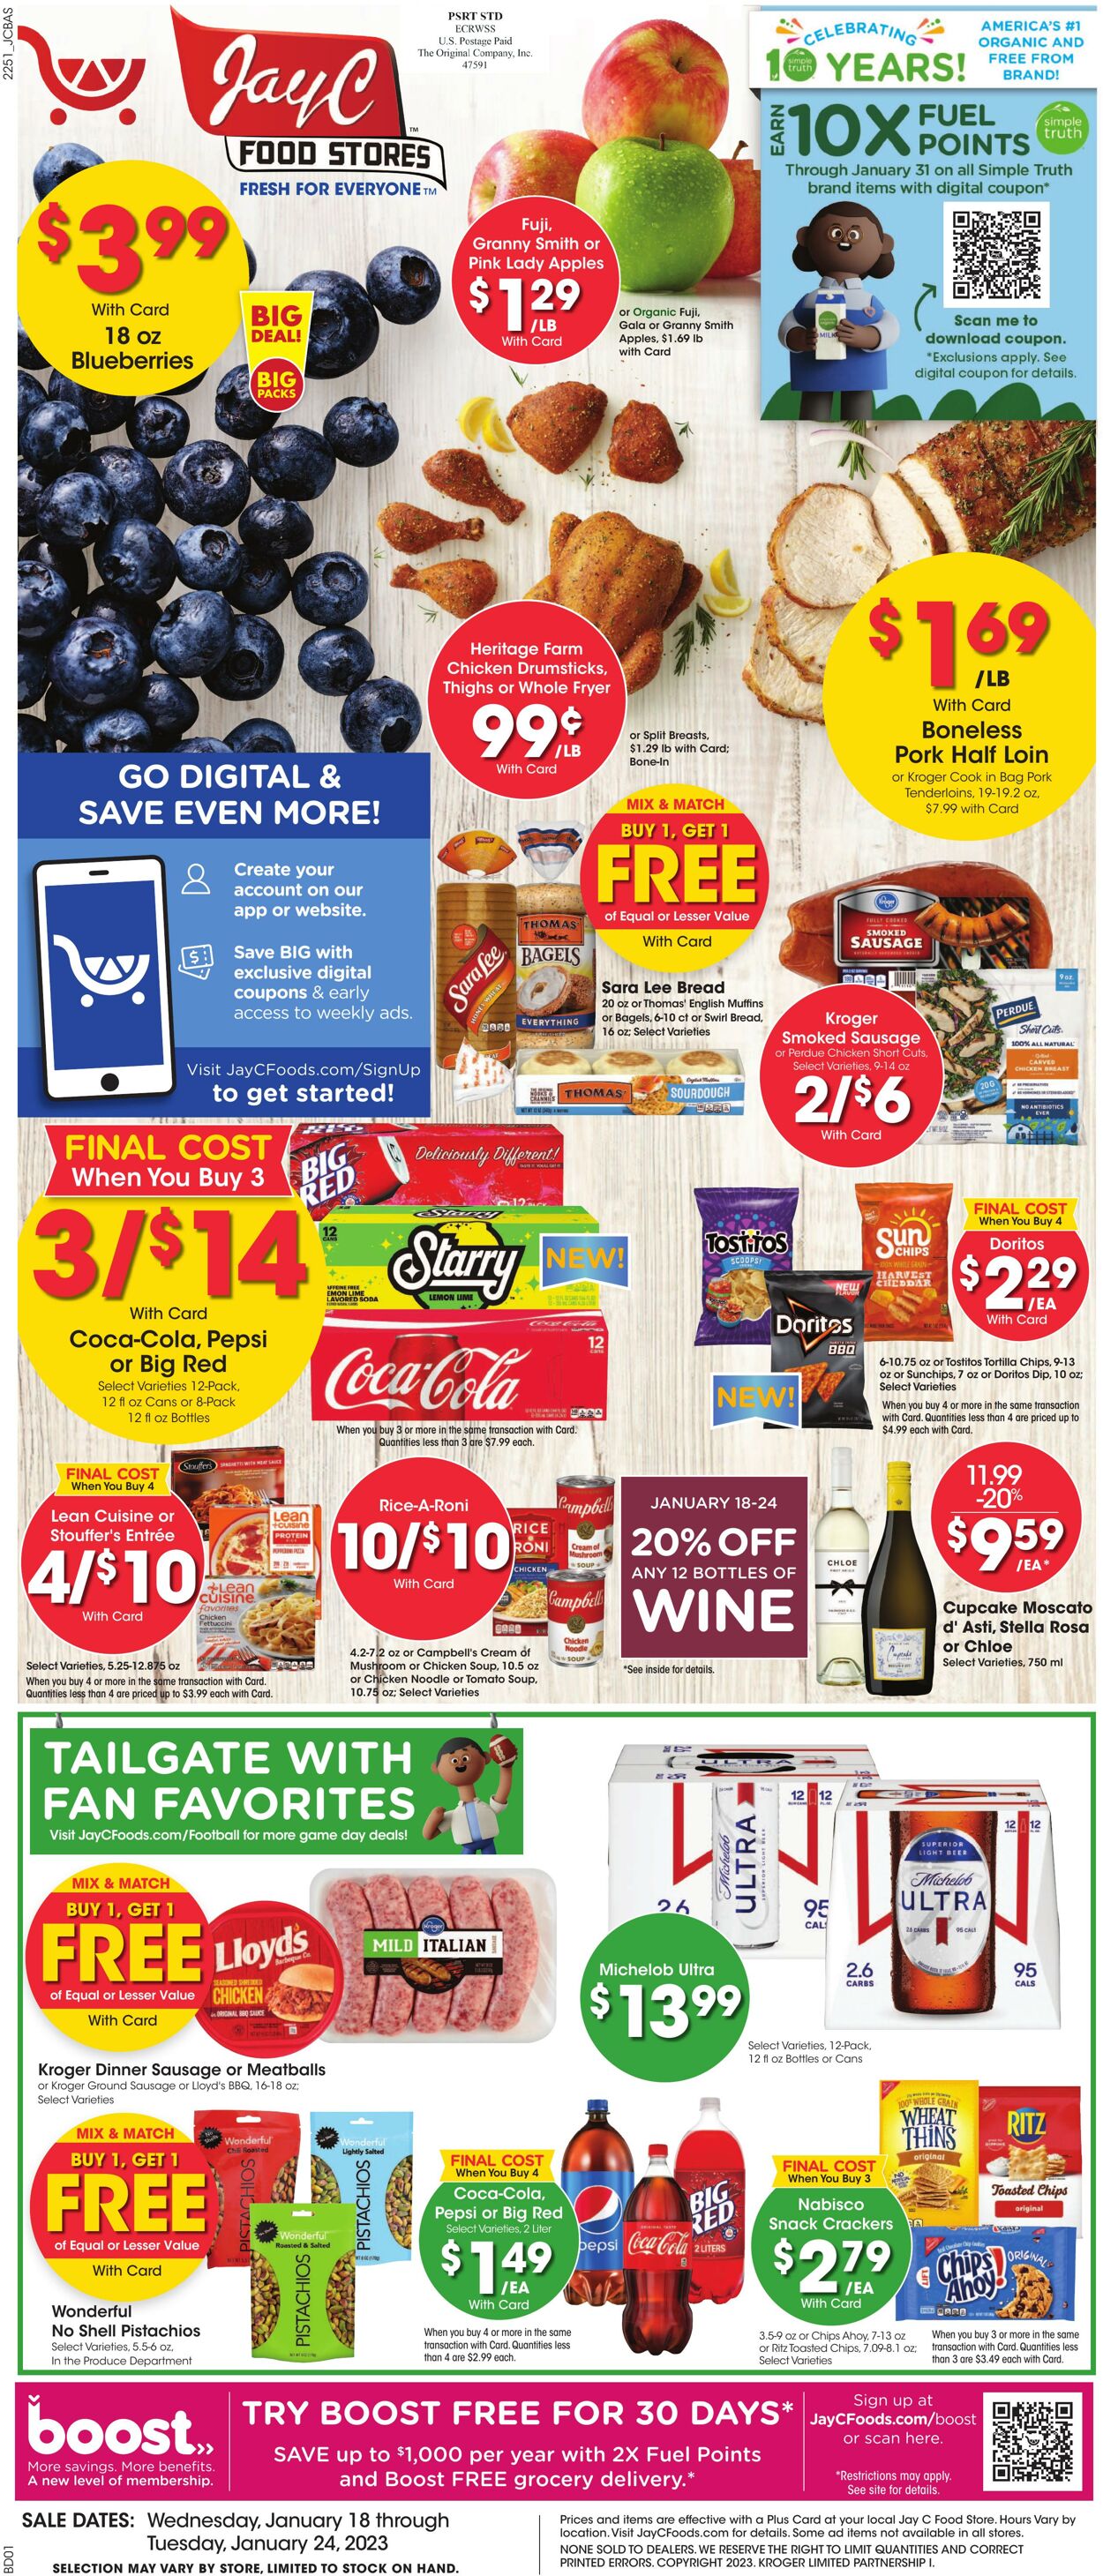 Weekly ad JayC Food Stores 01/18/2023-01/24/2023